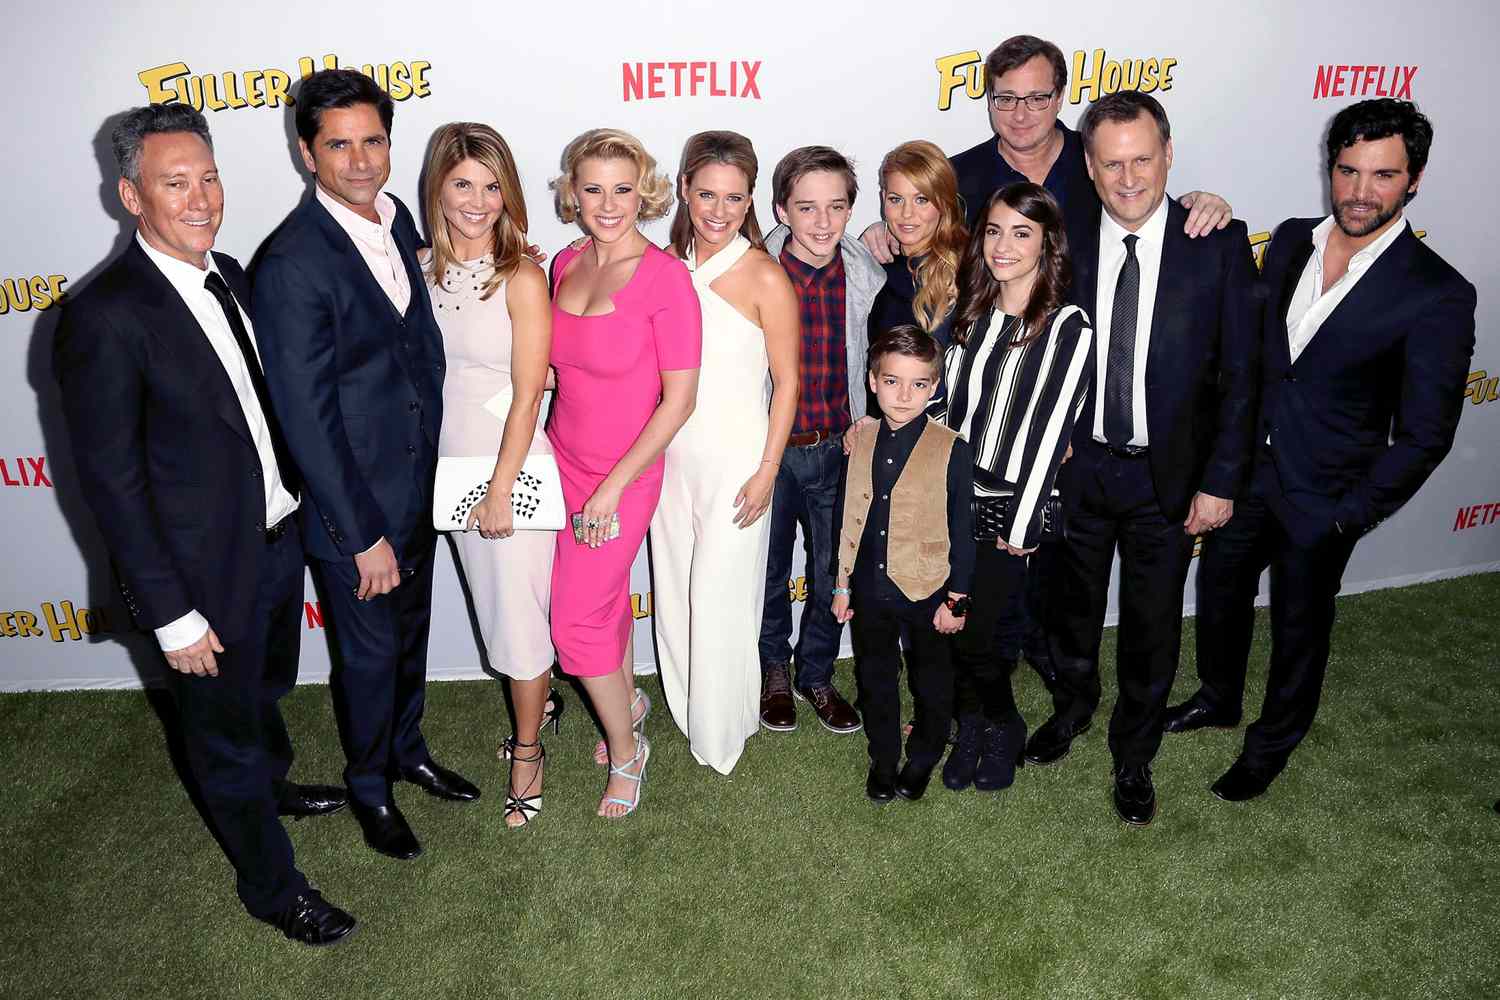 Fuller House house cast Premiere Of Netflix's "Fuller House" - Arrivals